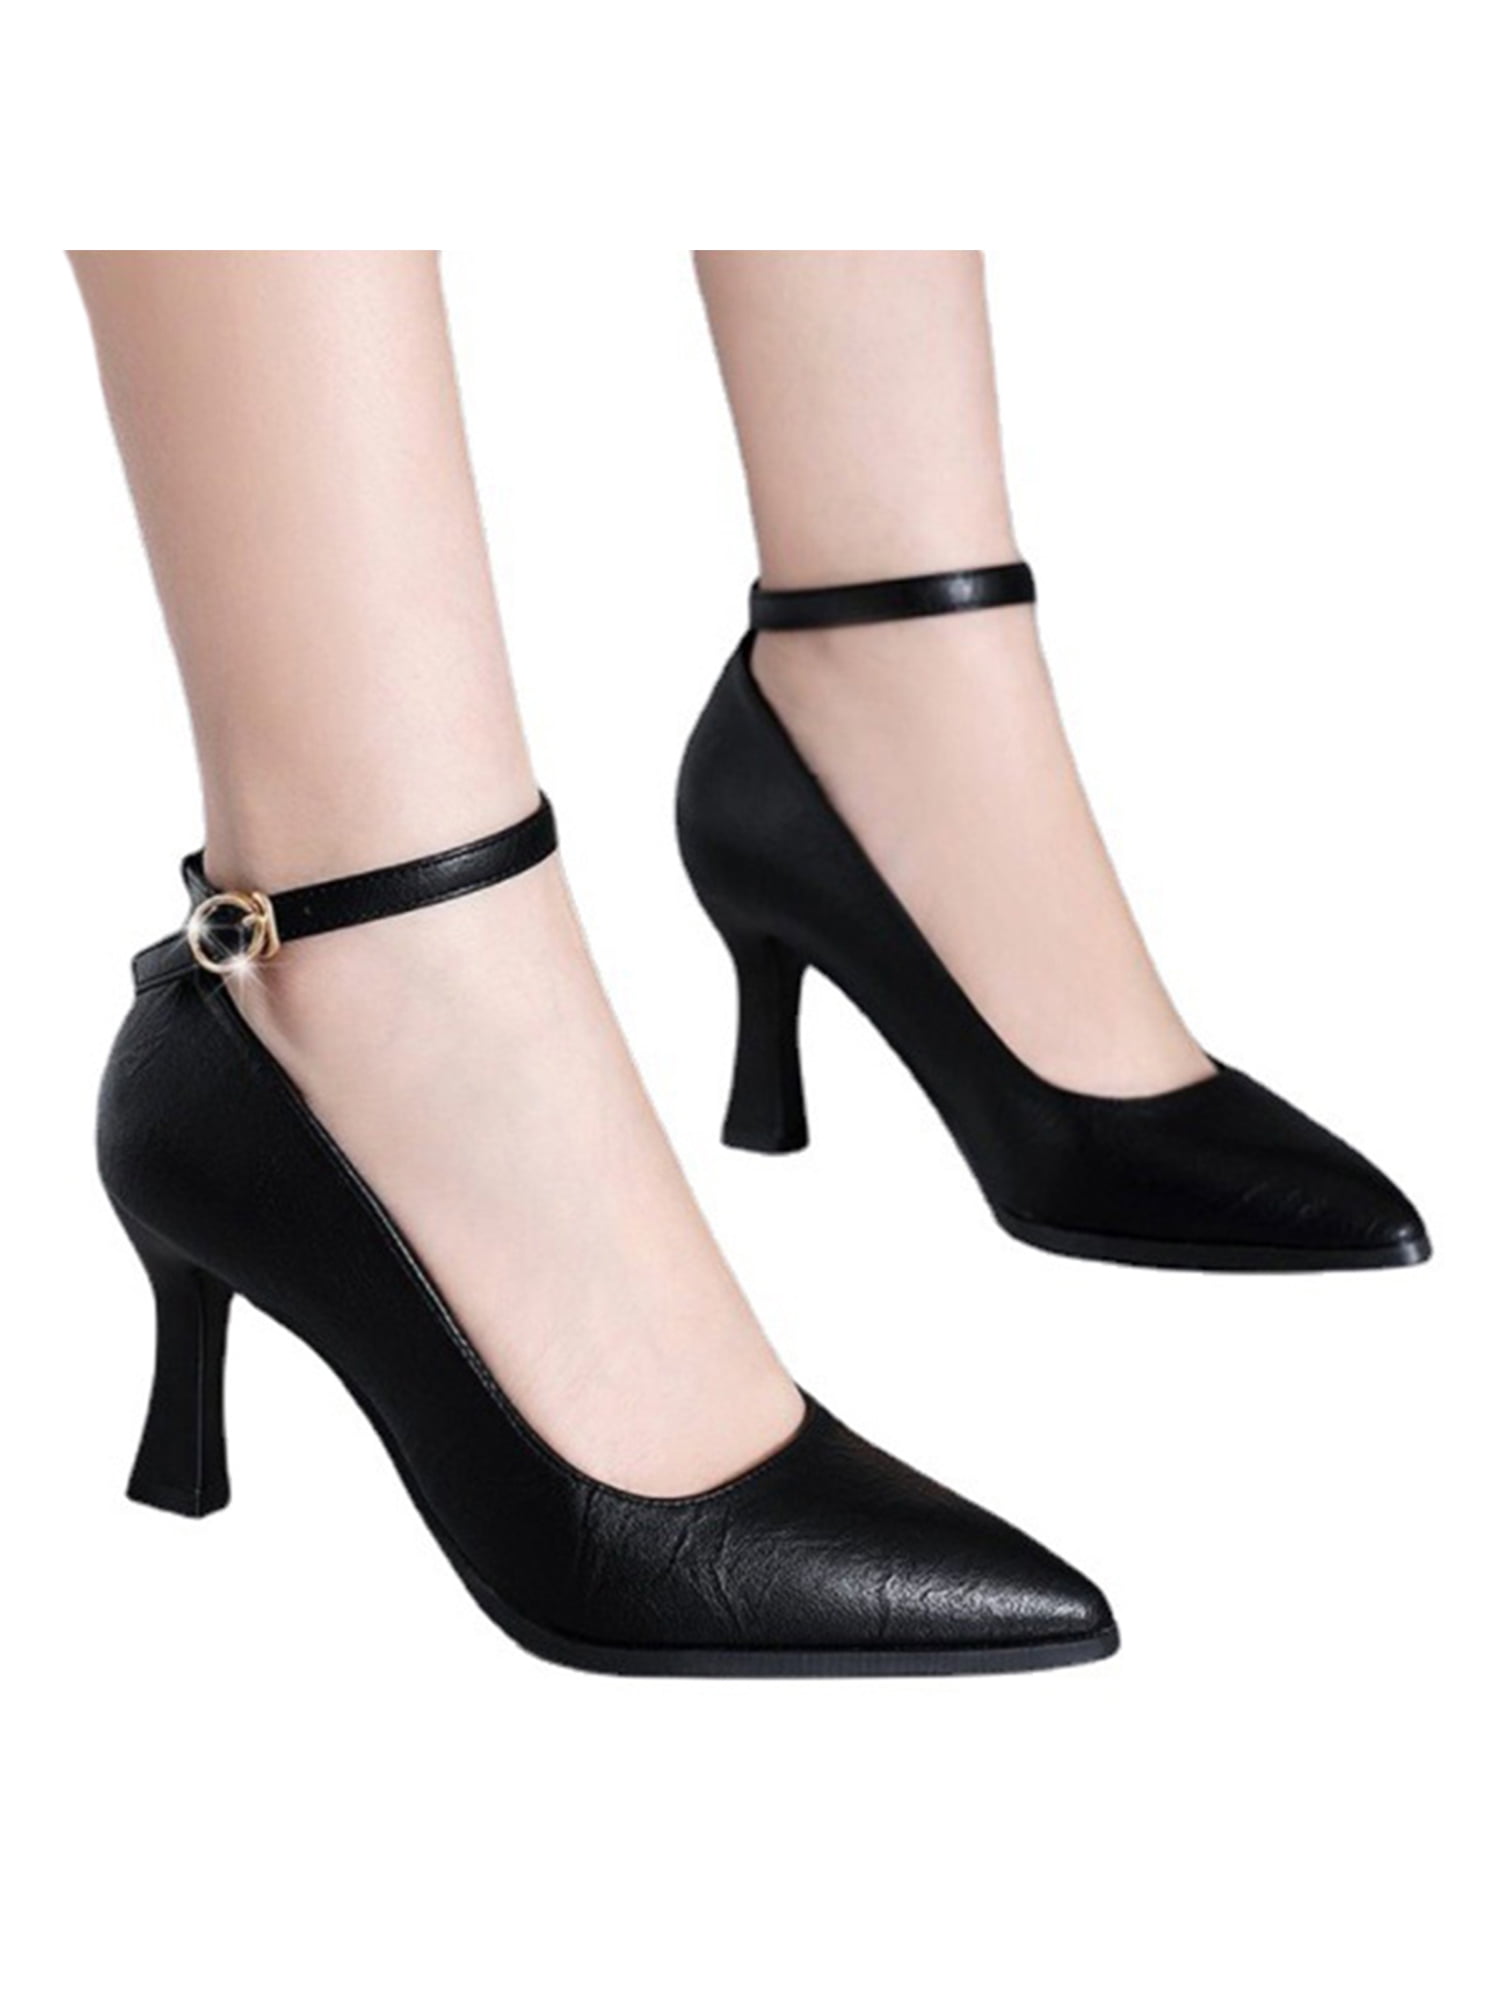 High Heels for Women Closed Toe Stillettos Heel Dress Shoes Black 10 -  Walmart.com